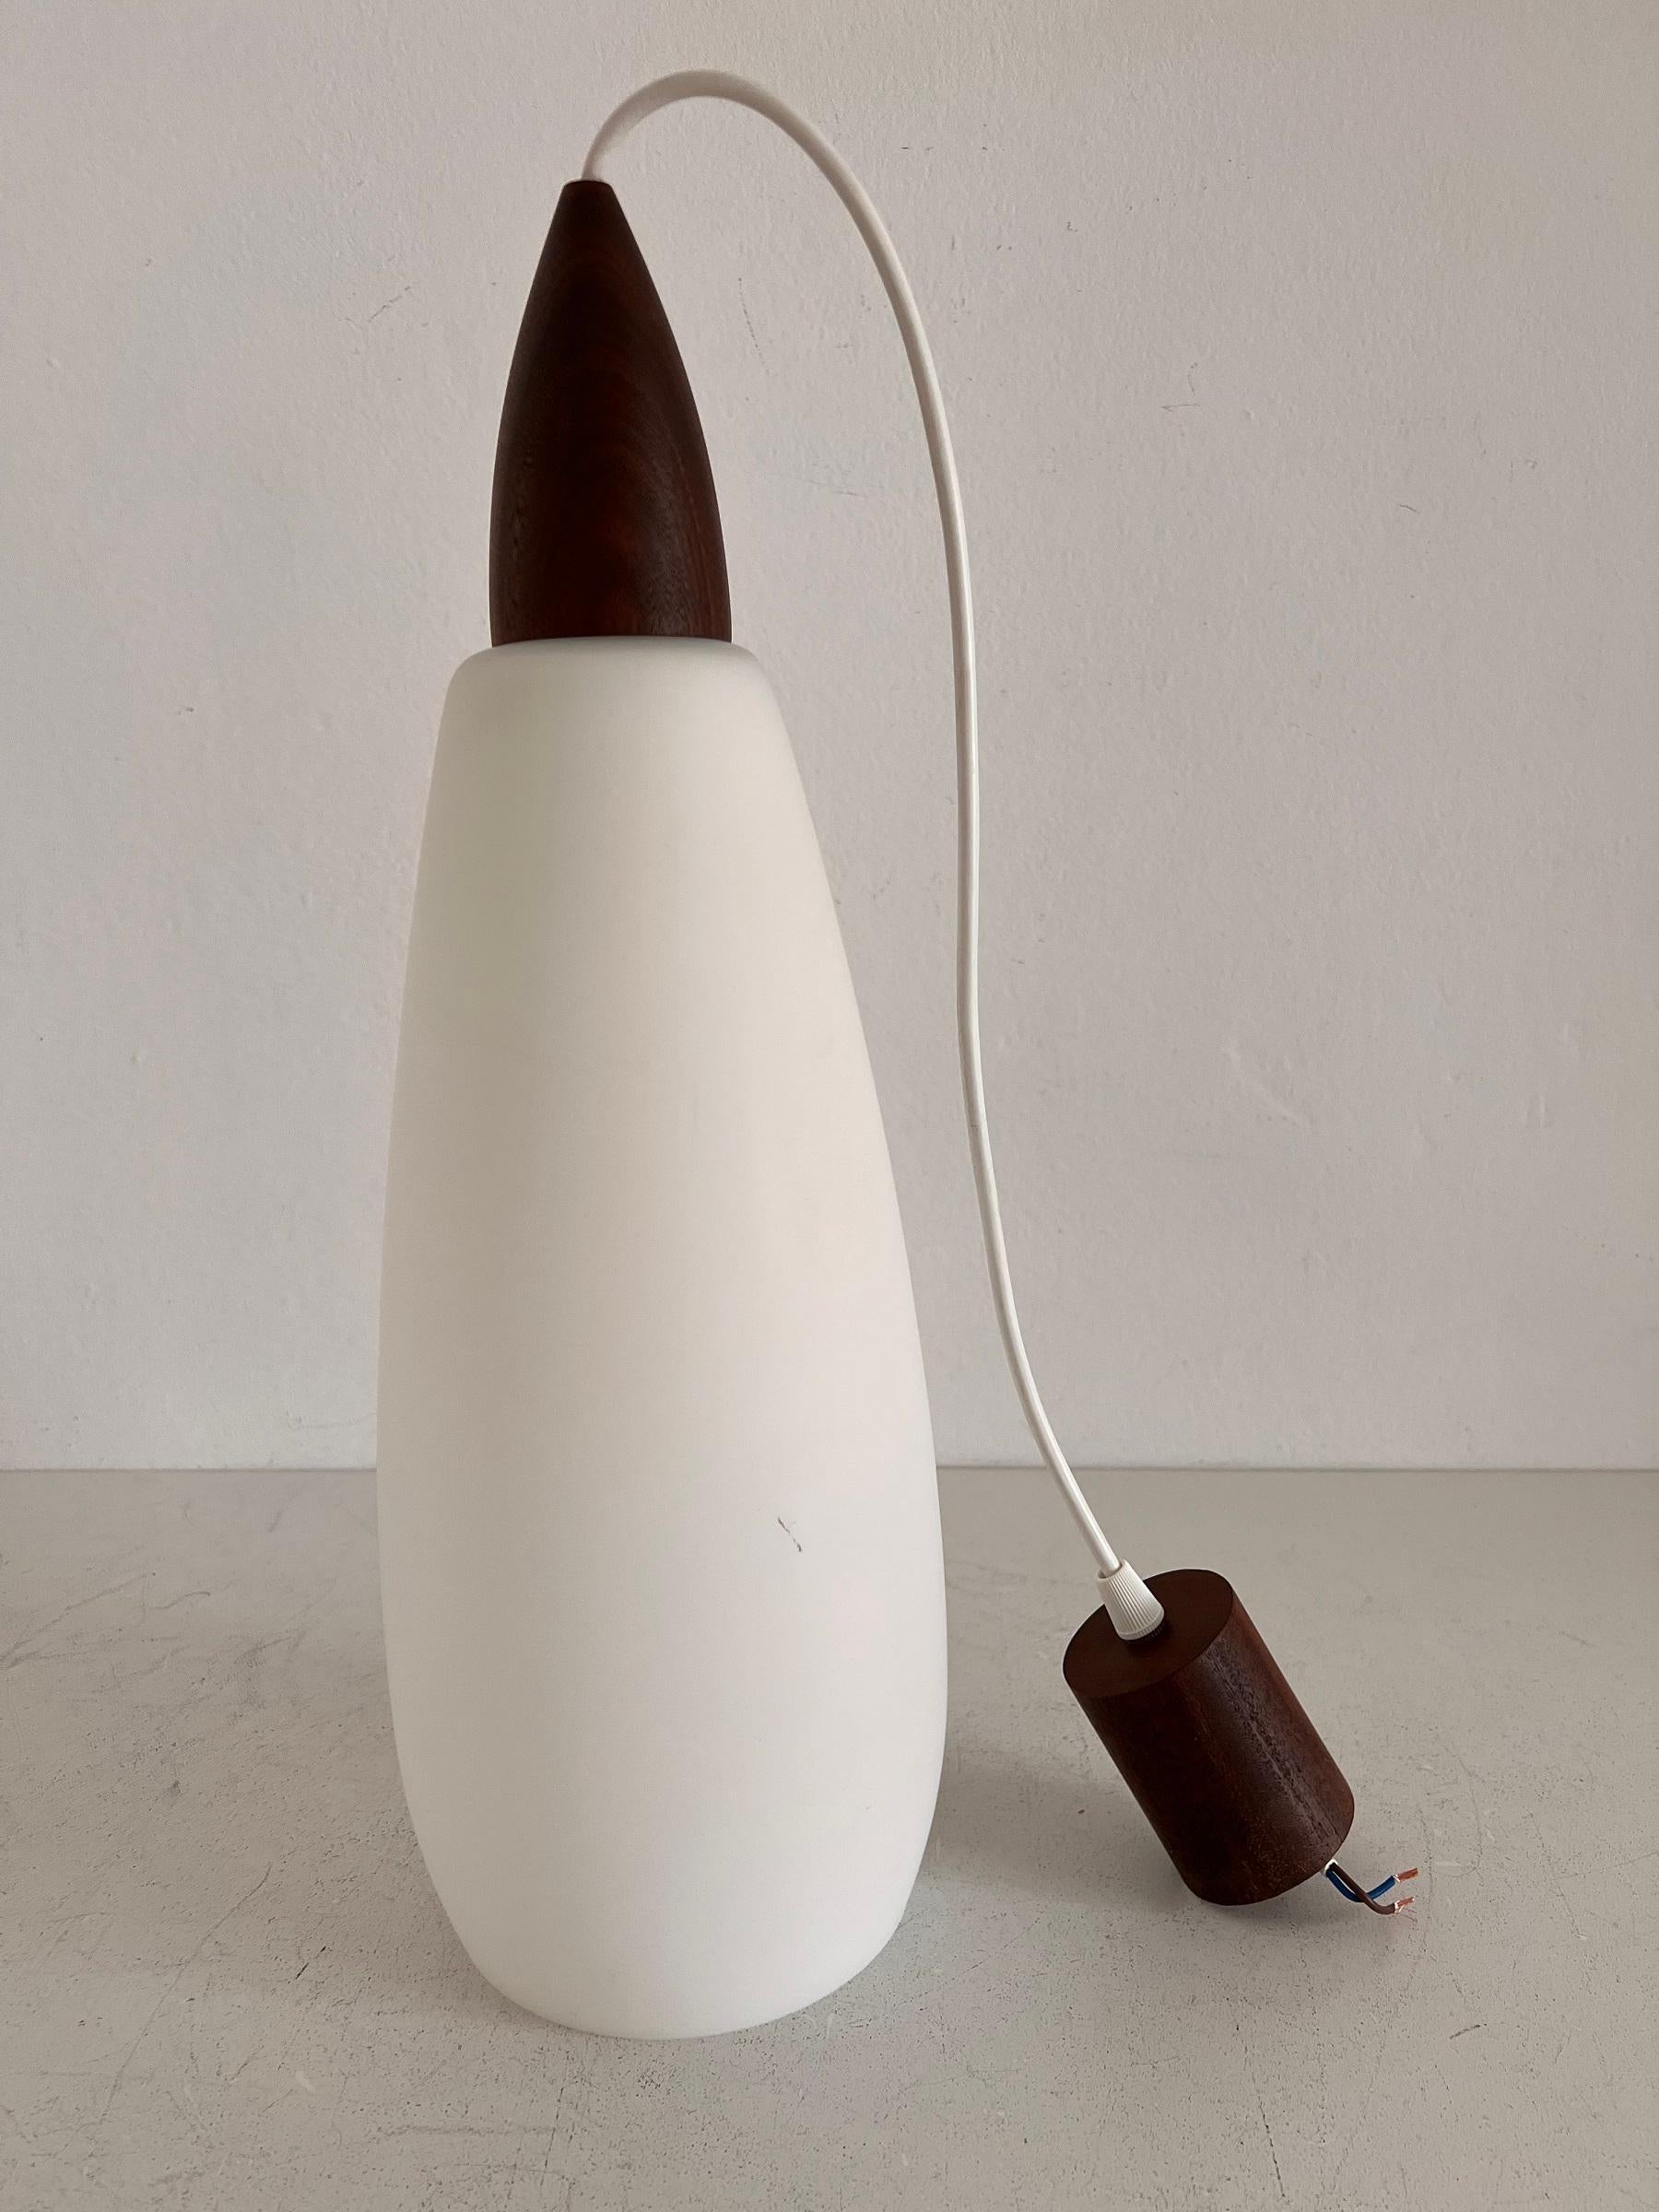 Italian Midcentury Nordic Style Pendant in Teak and Milk Glass, 1960s For Sale 7